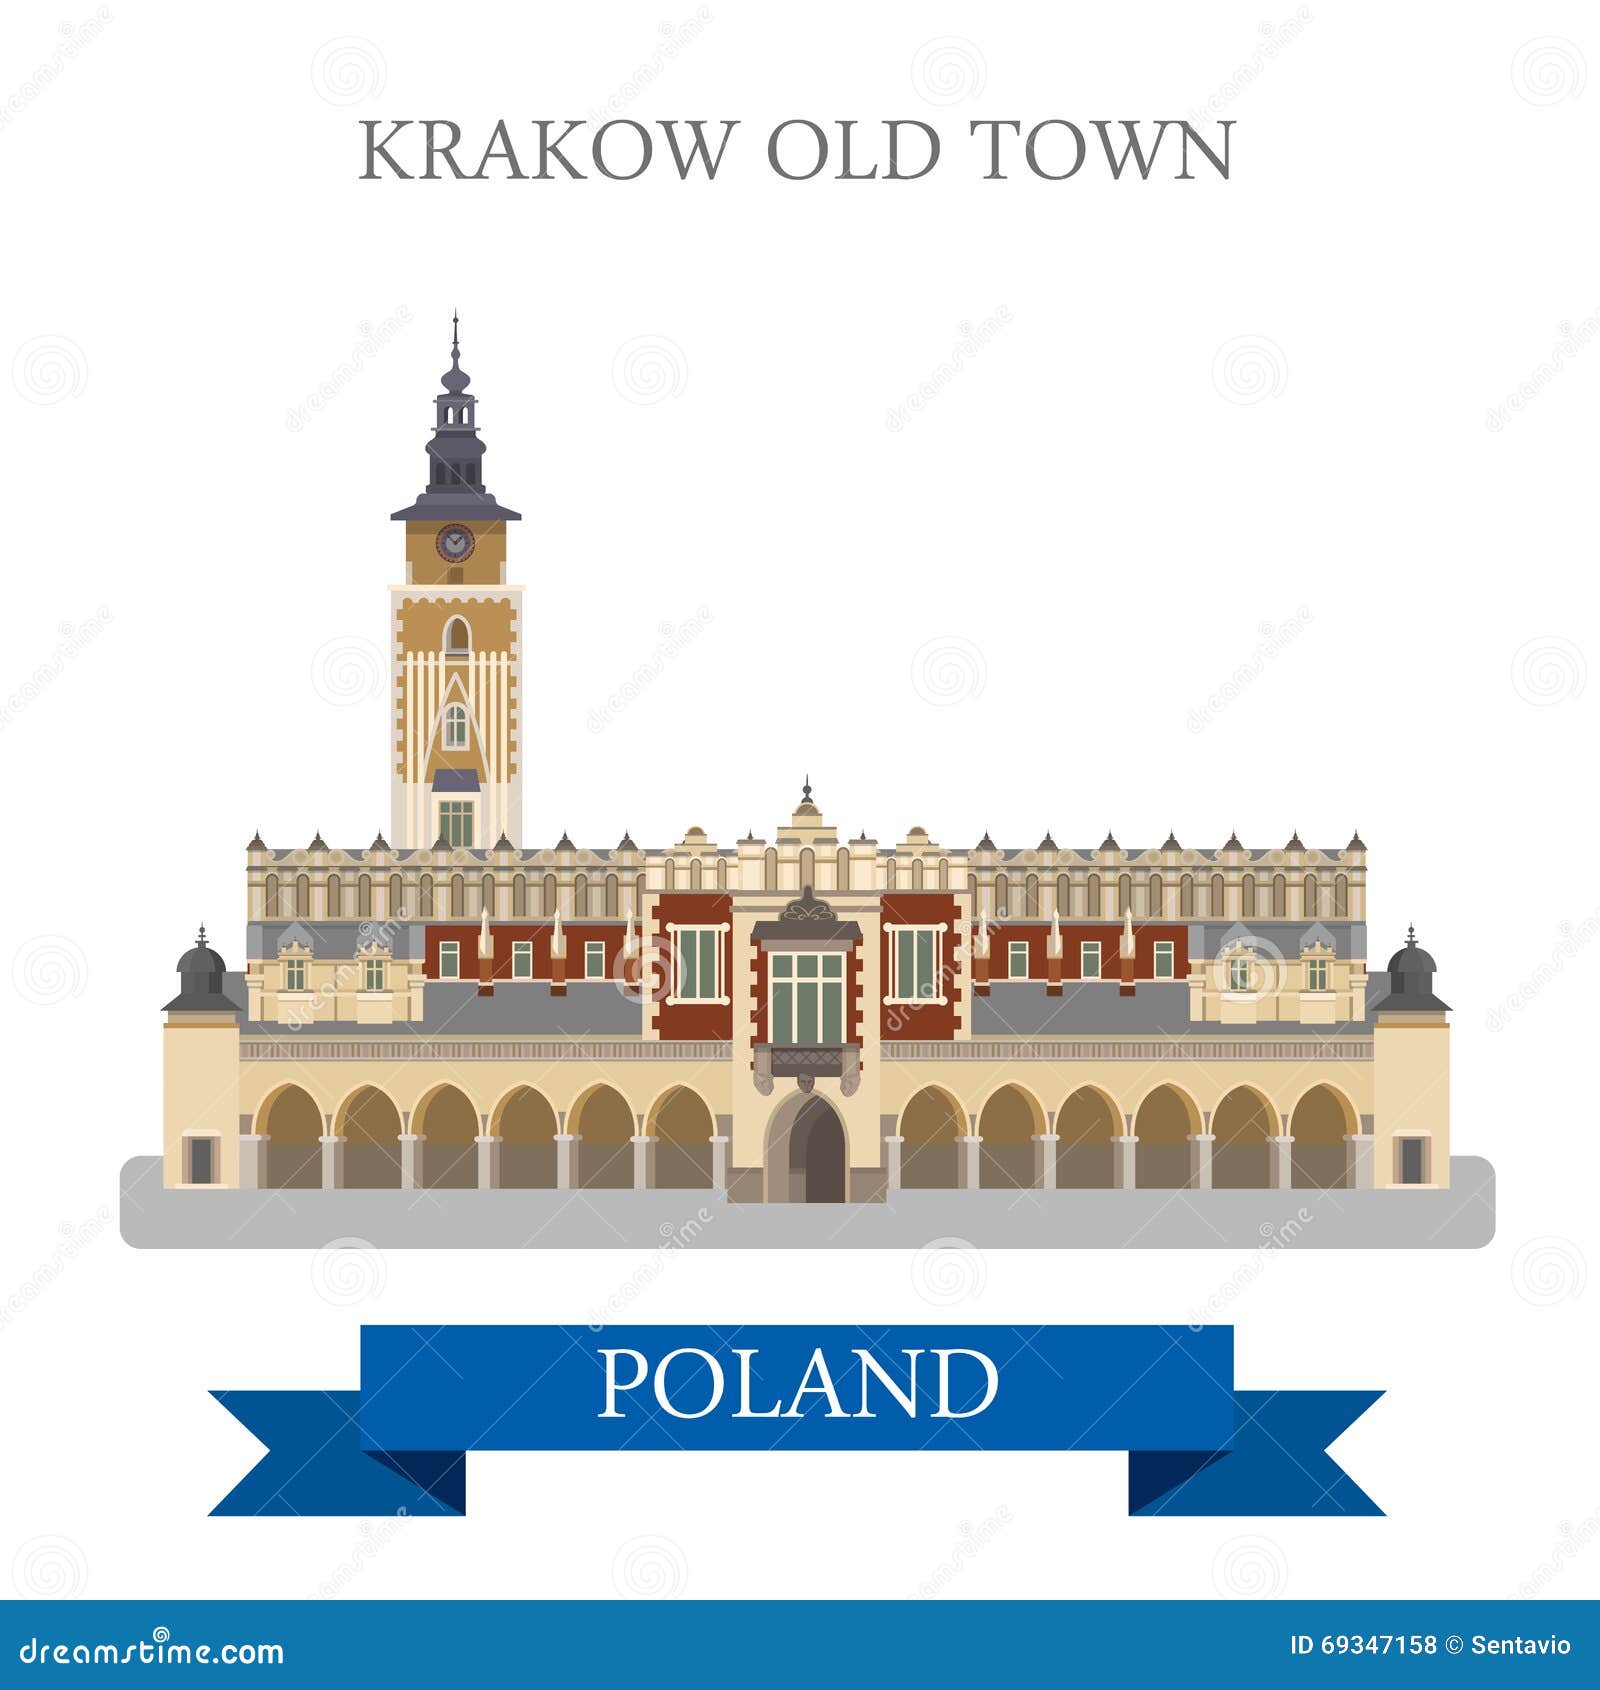 krakow old town poland europe flat  attraction landmark